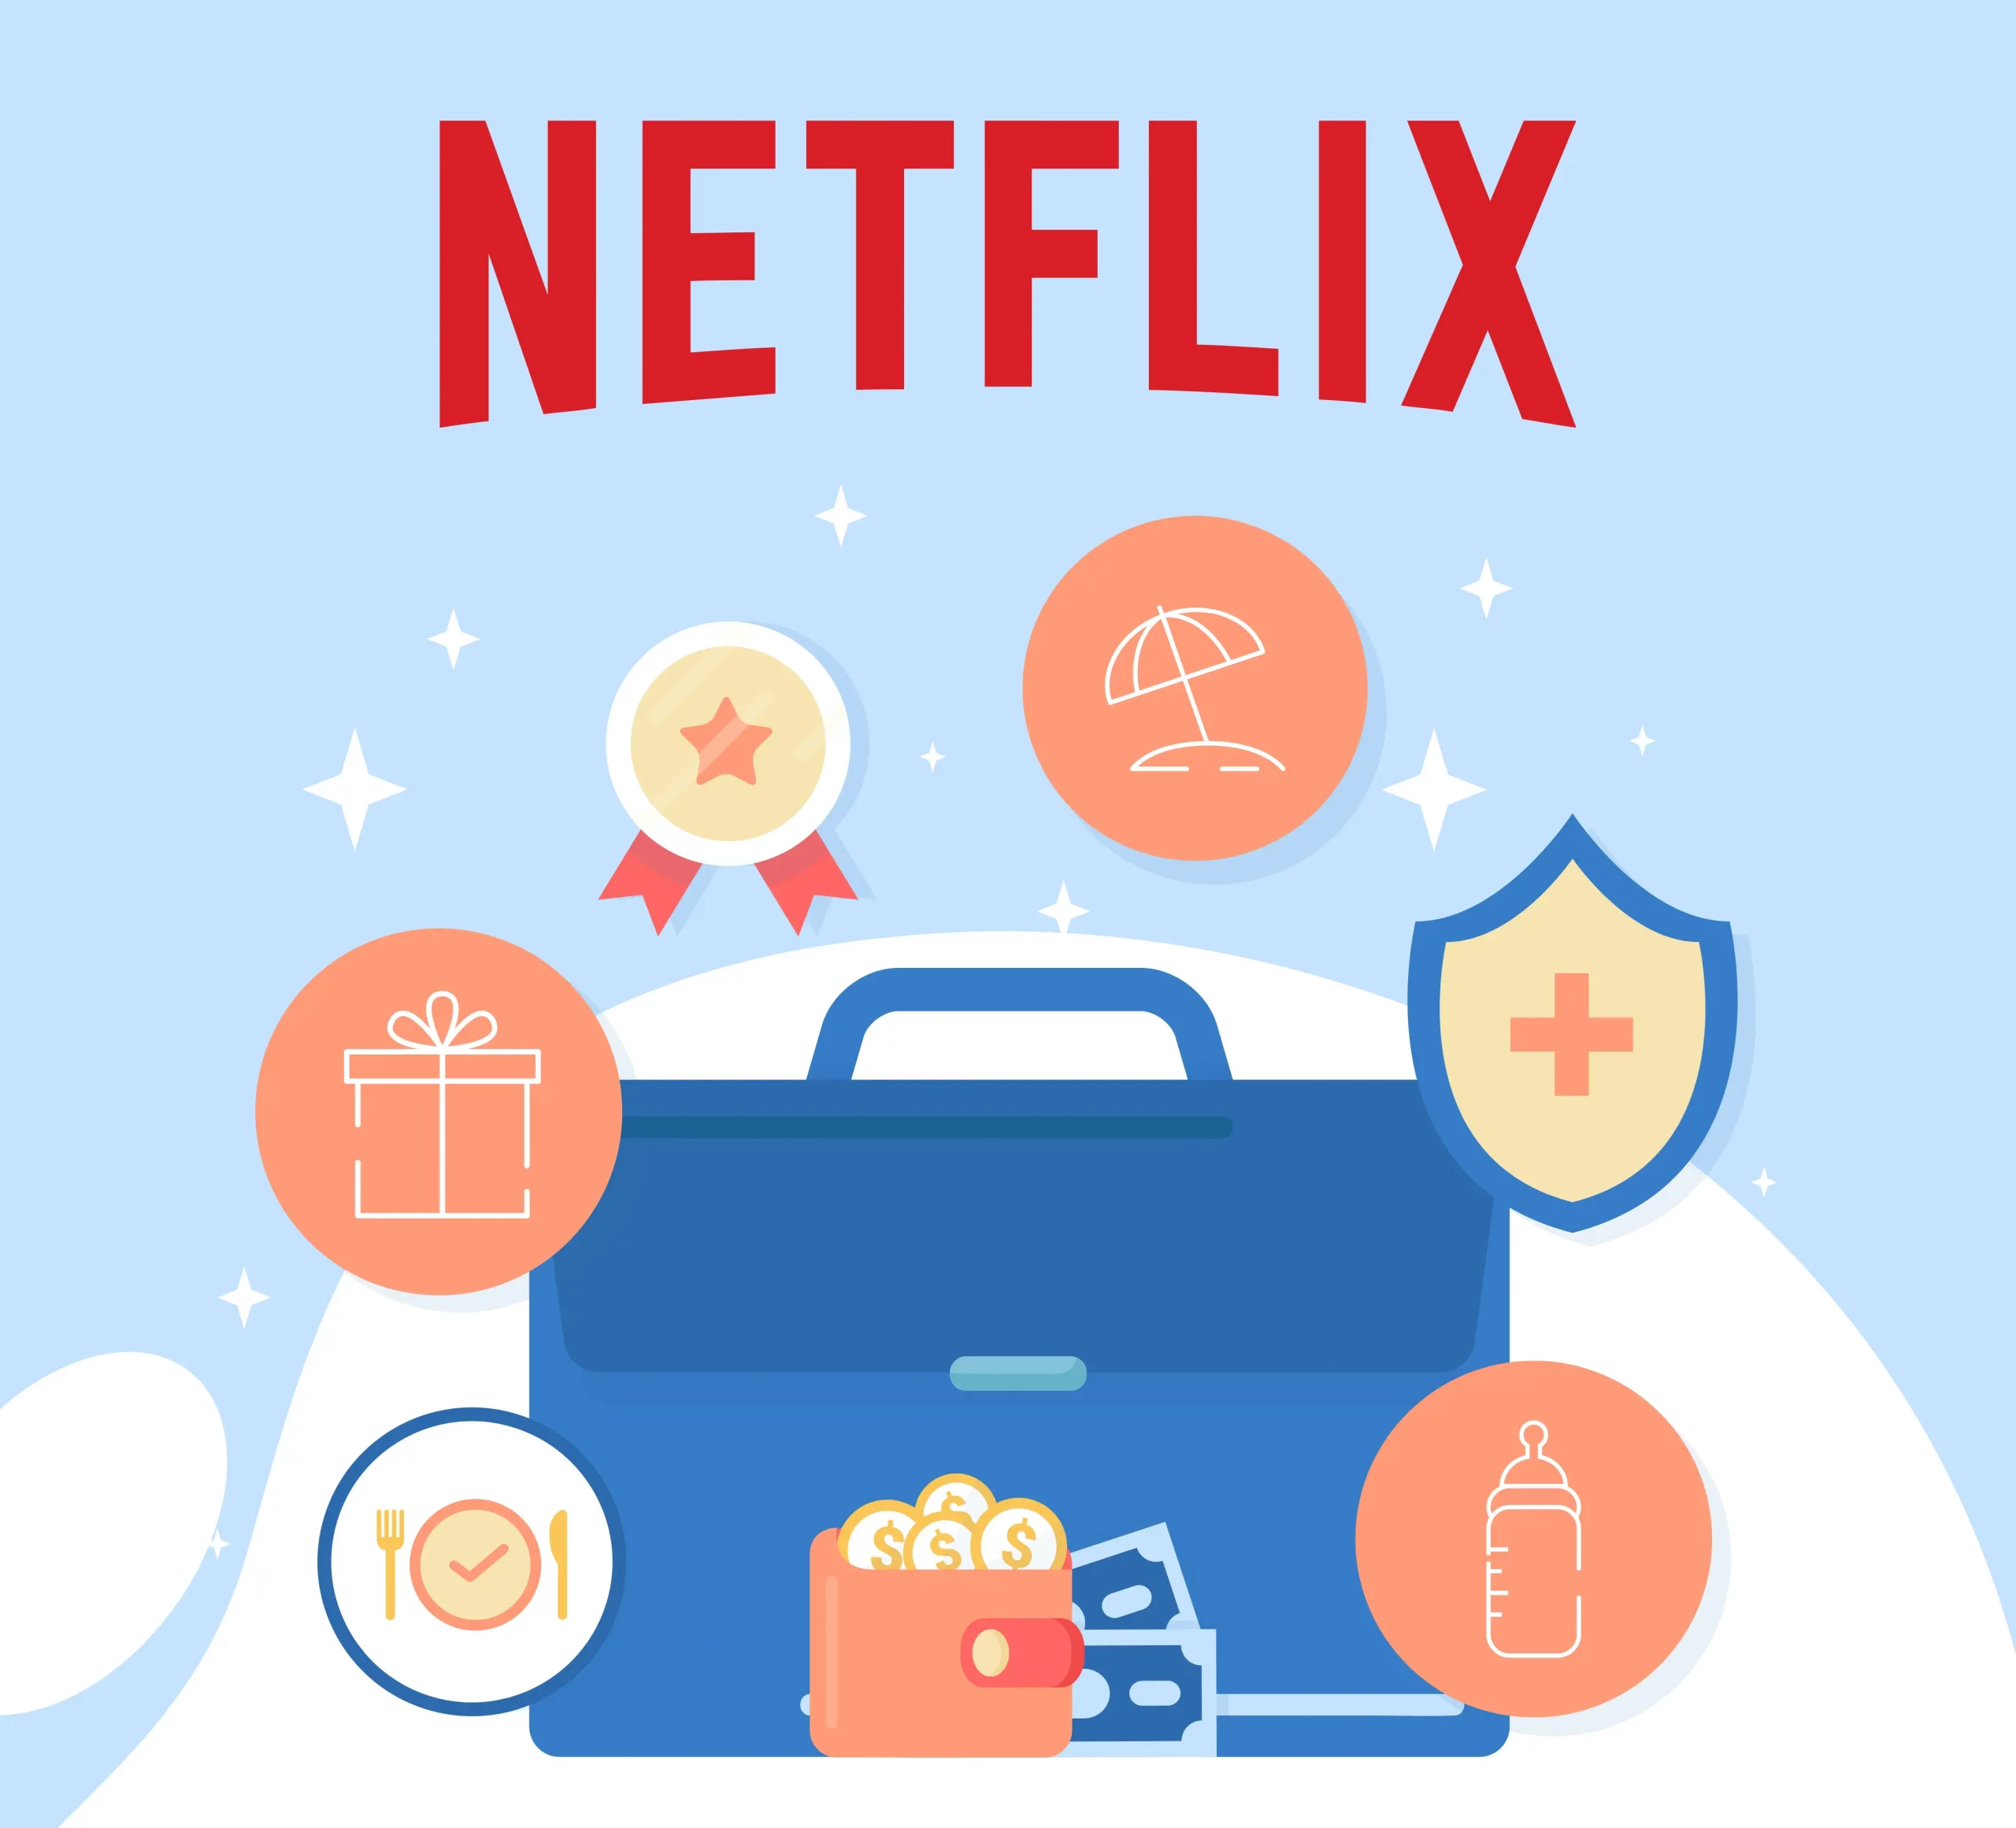 Netflix employer brand